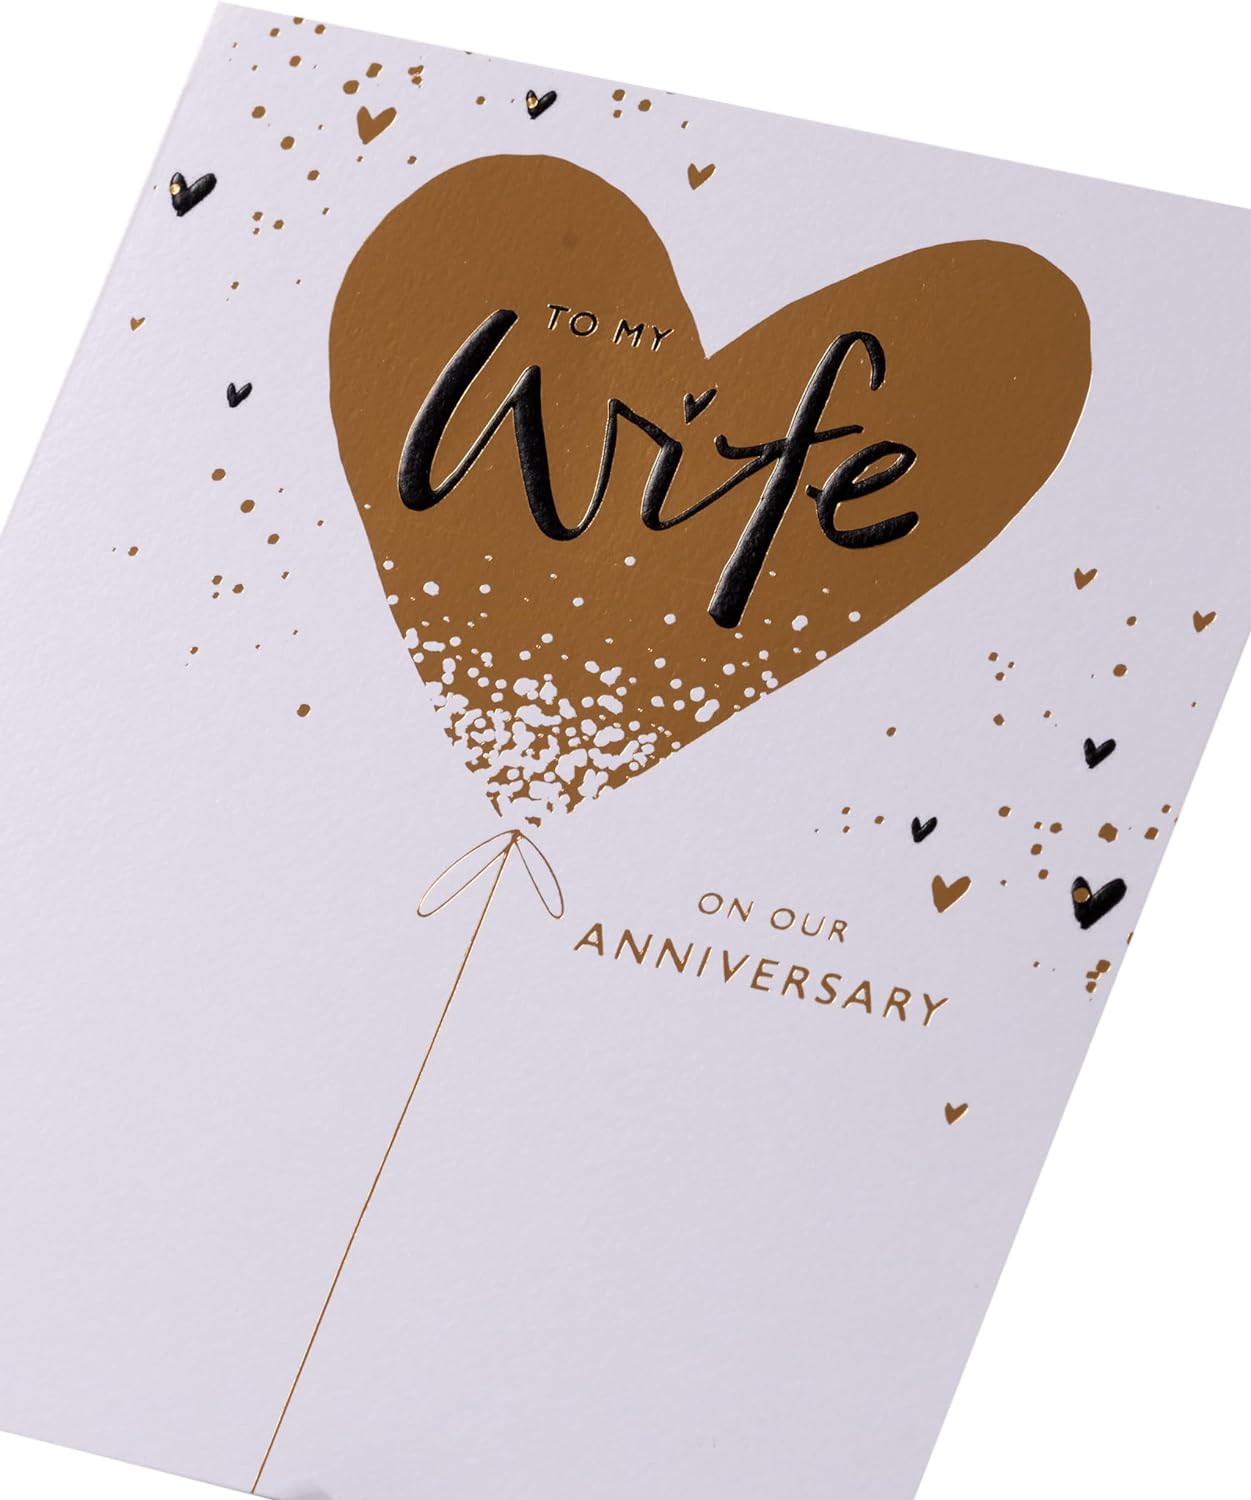 Gold Heart Balloon Design Wife Anniversary Card